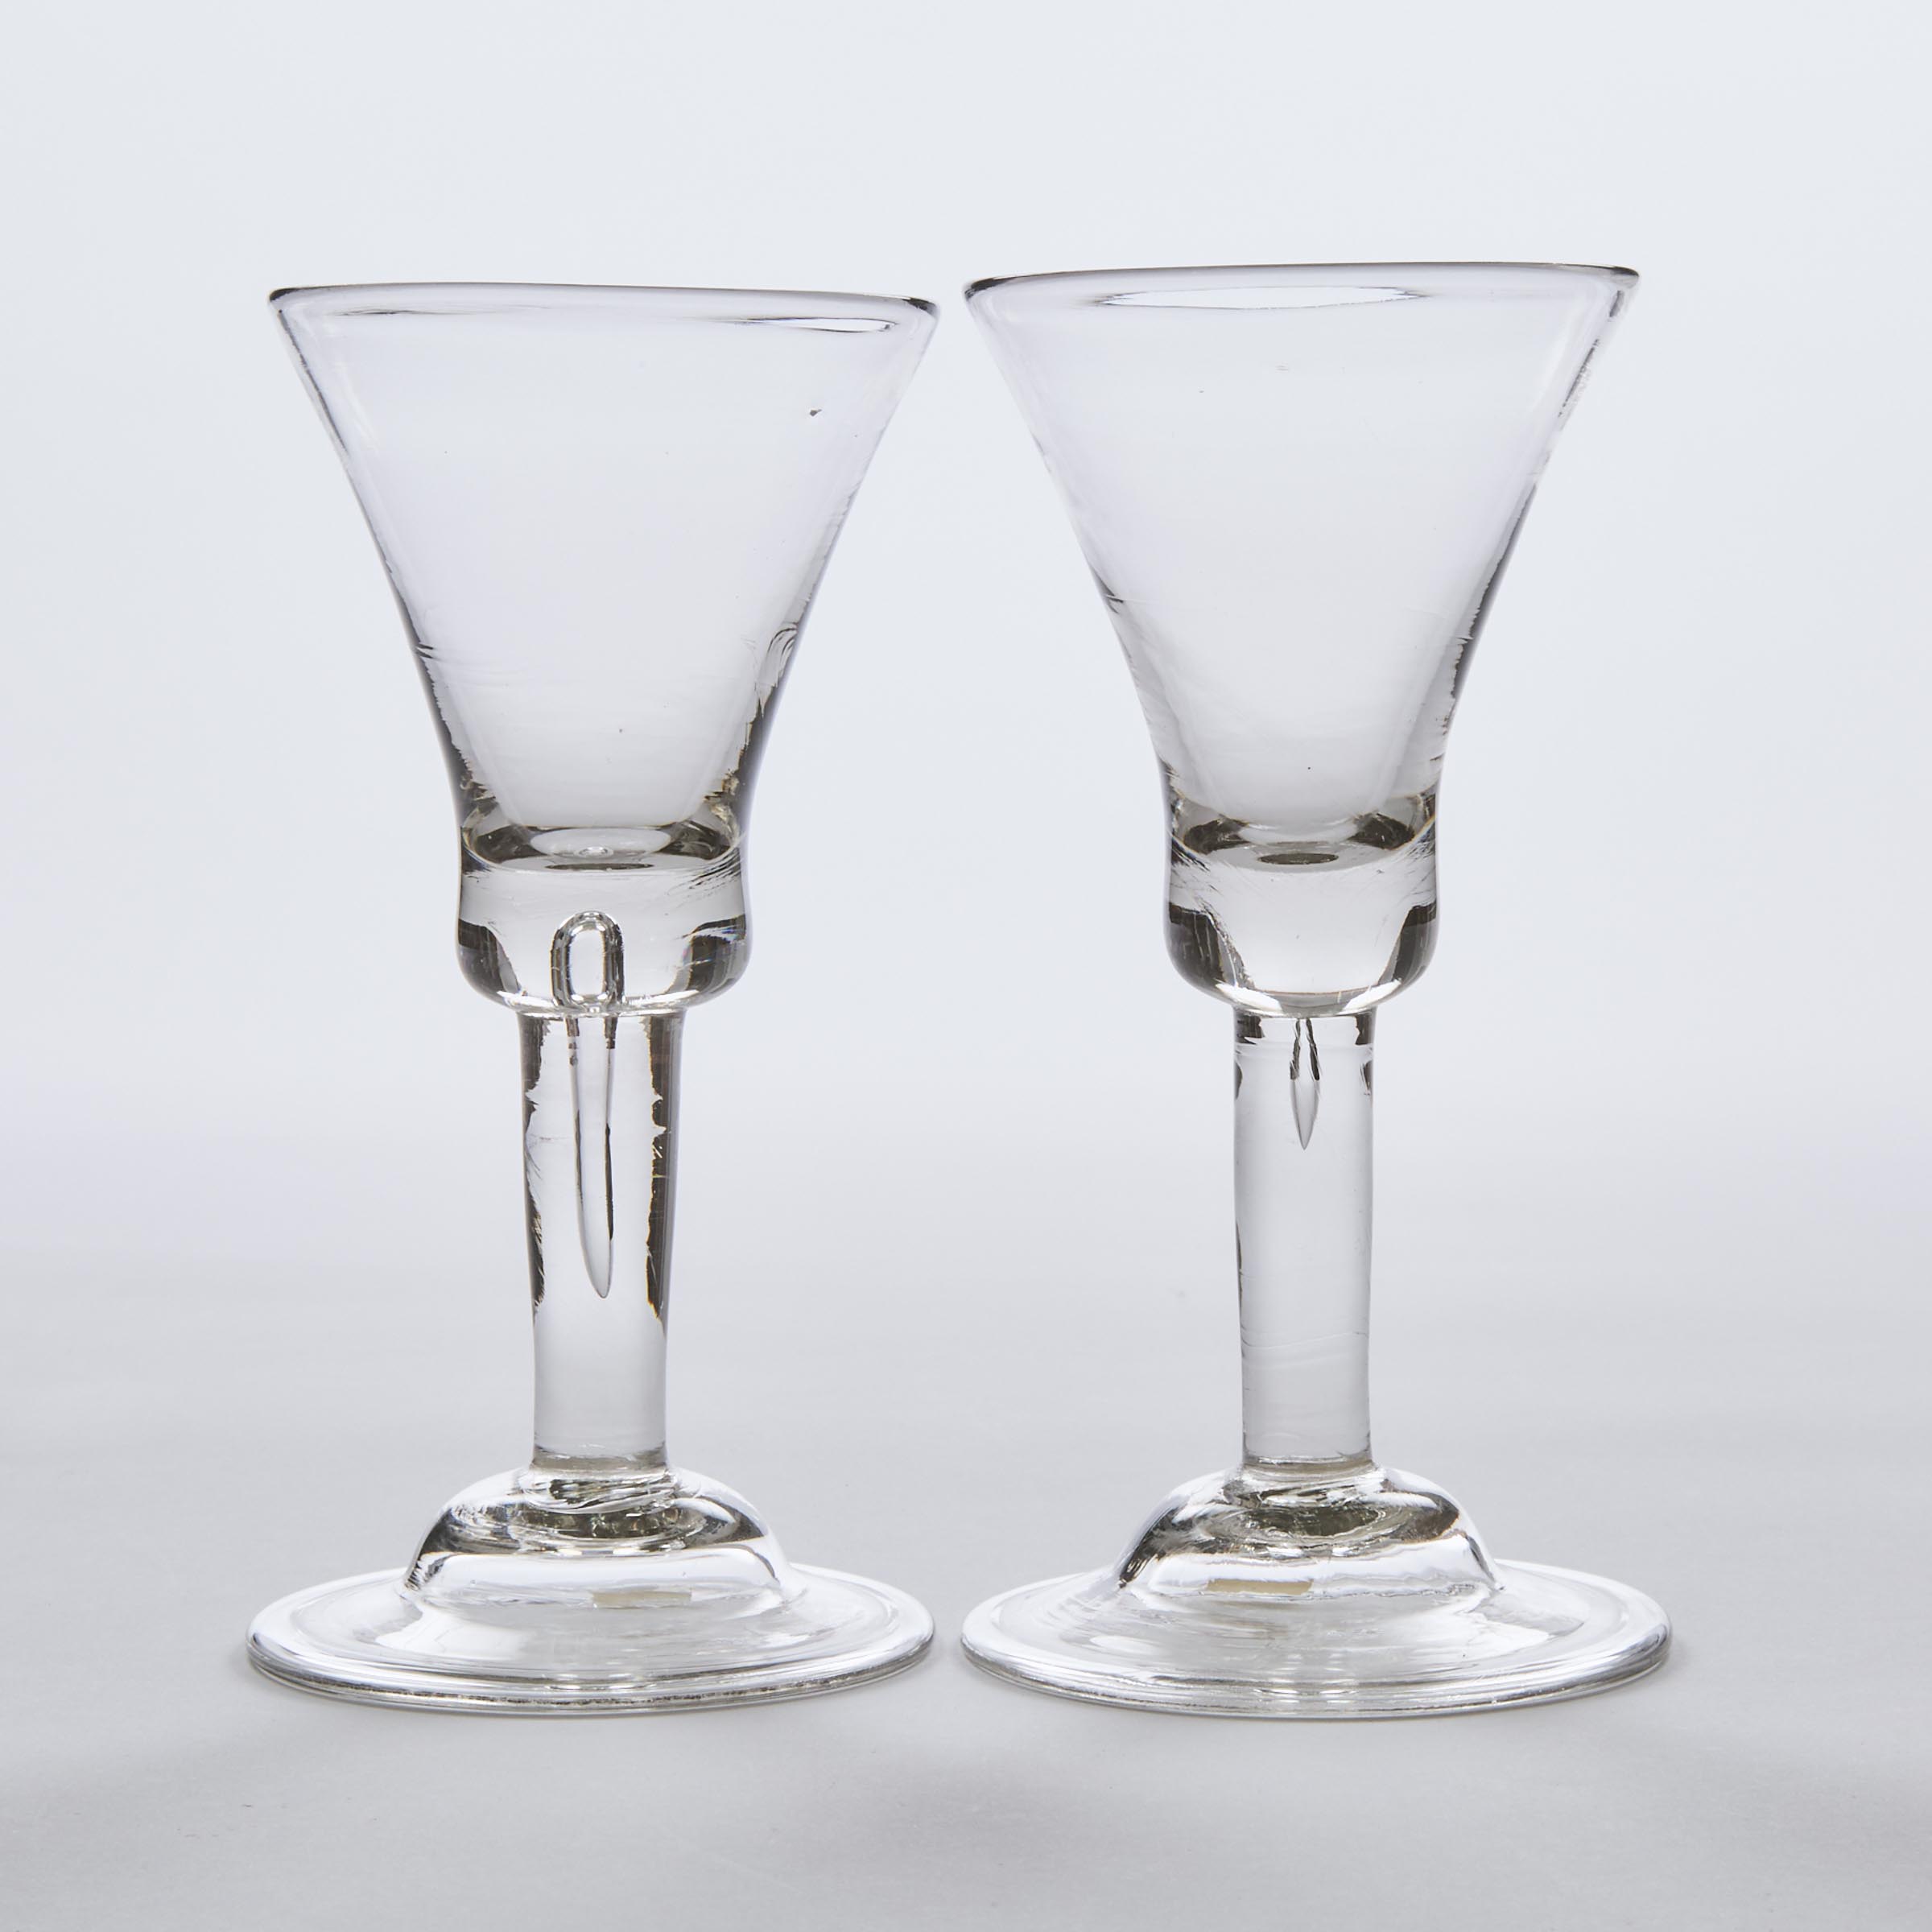 Pair of English Teared Plain Stemmed Wine Glasses, mid-18th century